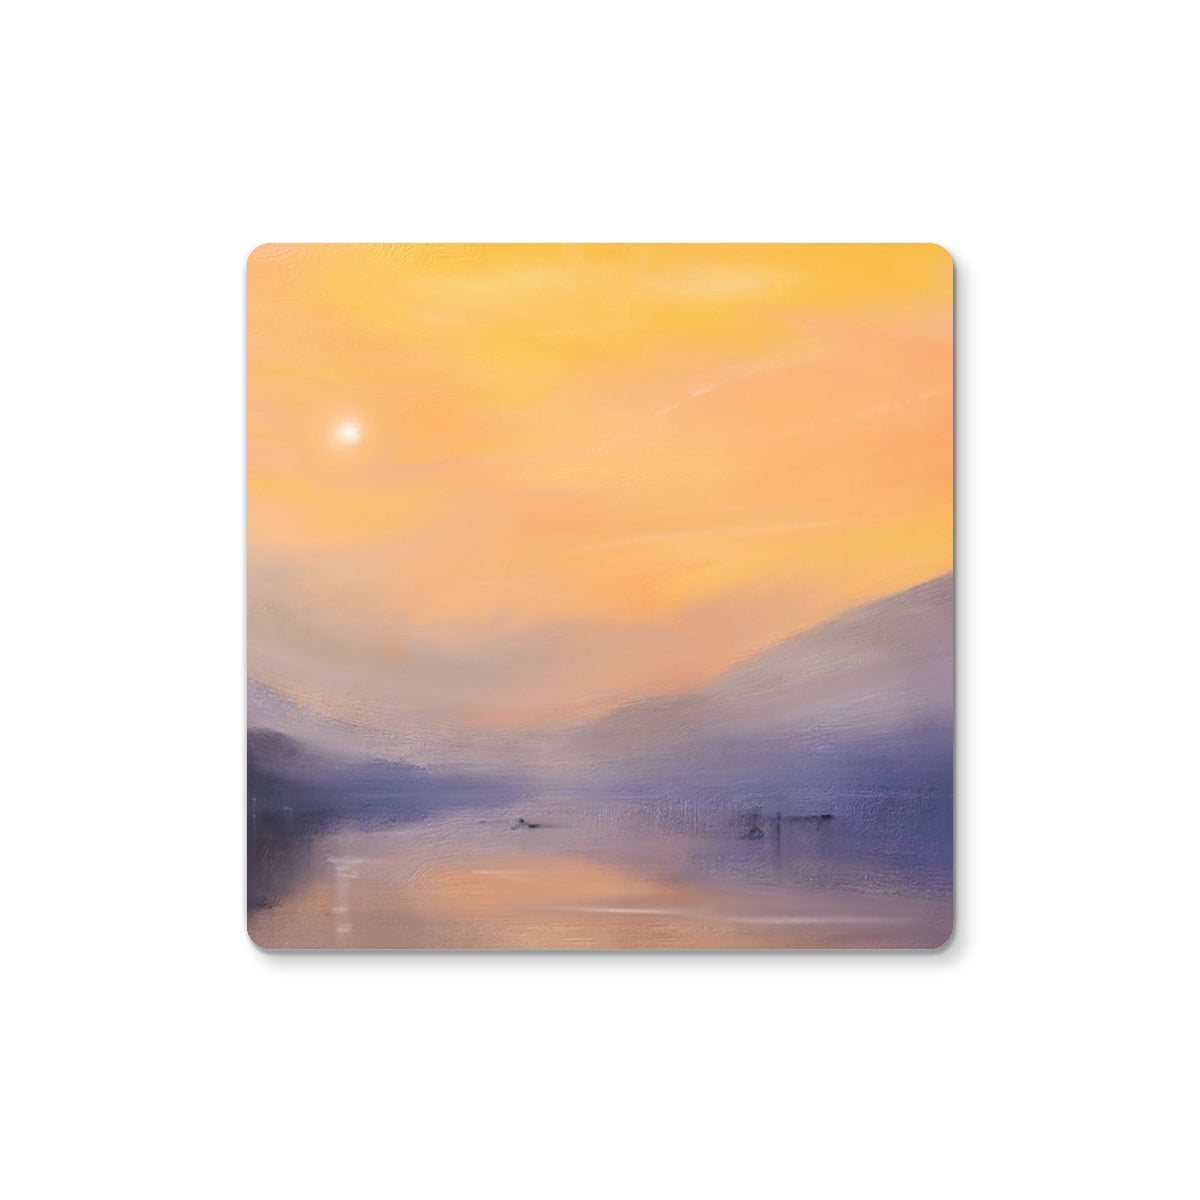 Loch Eck Dusk Art Gifts Coaster-Homeware-Scottish Lochs & Mountains Art Gallery-Single Coaster-Paintings, Prints, Homeware, Art Gifts From Scotland By Scottish Artist Kevin Hunter